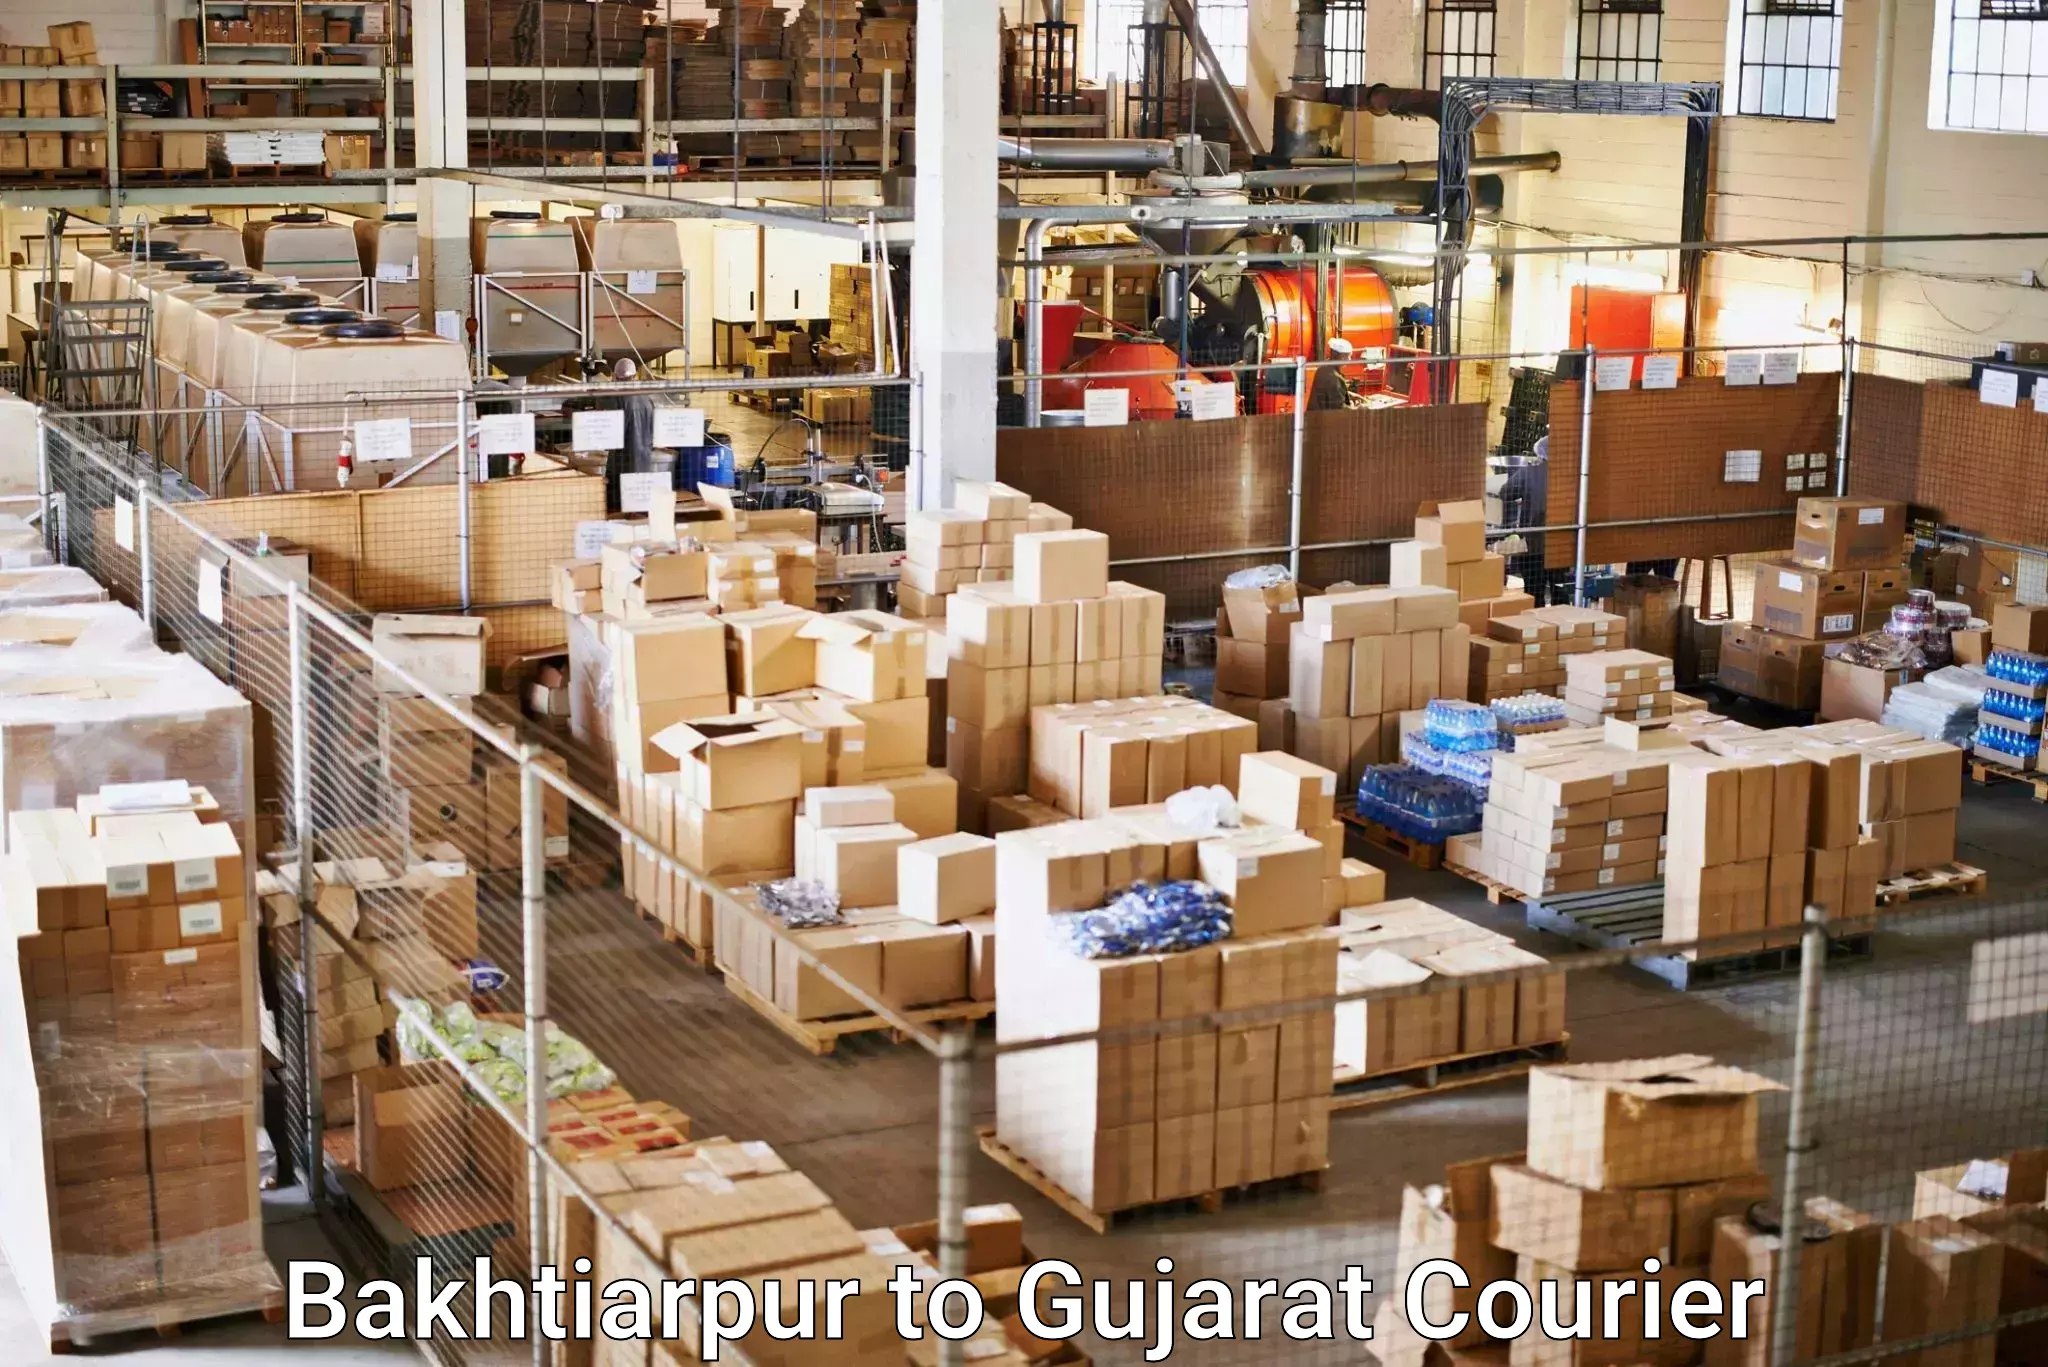 Global freight services Bakhtiarpur to Vatadara